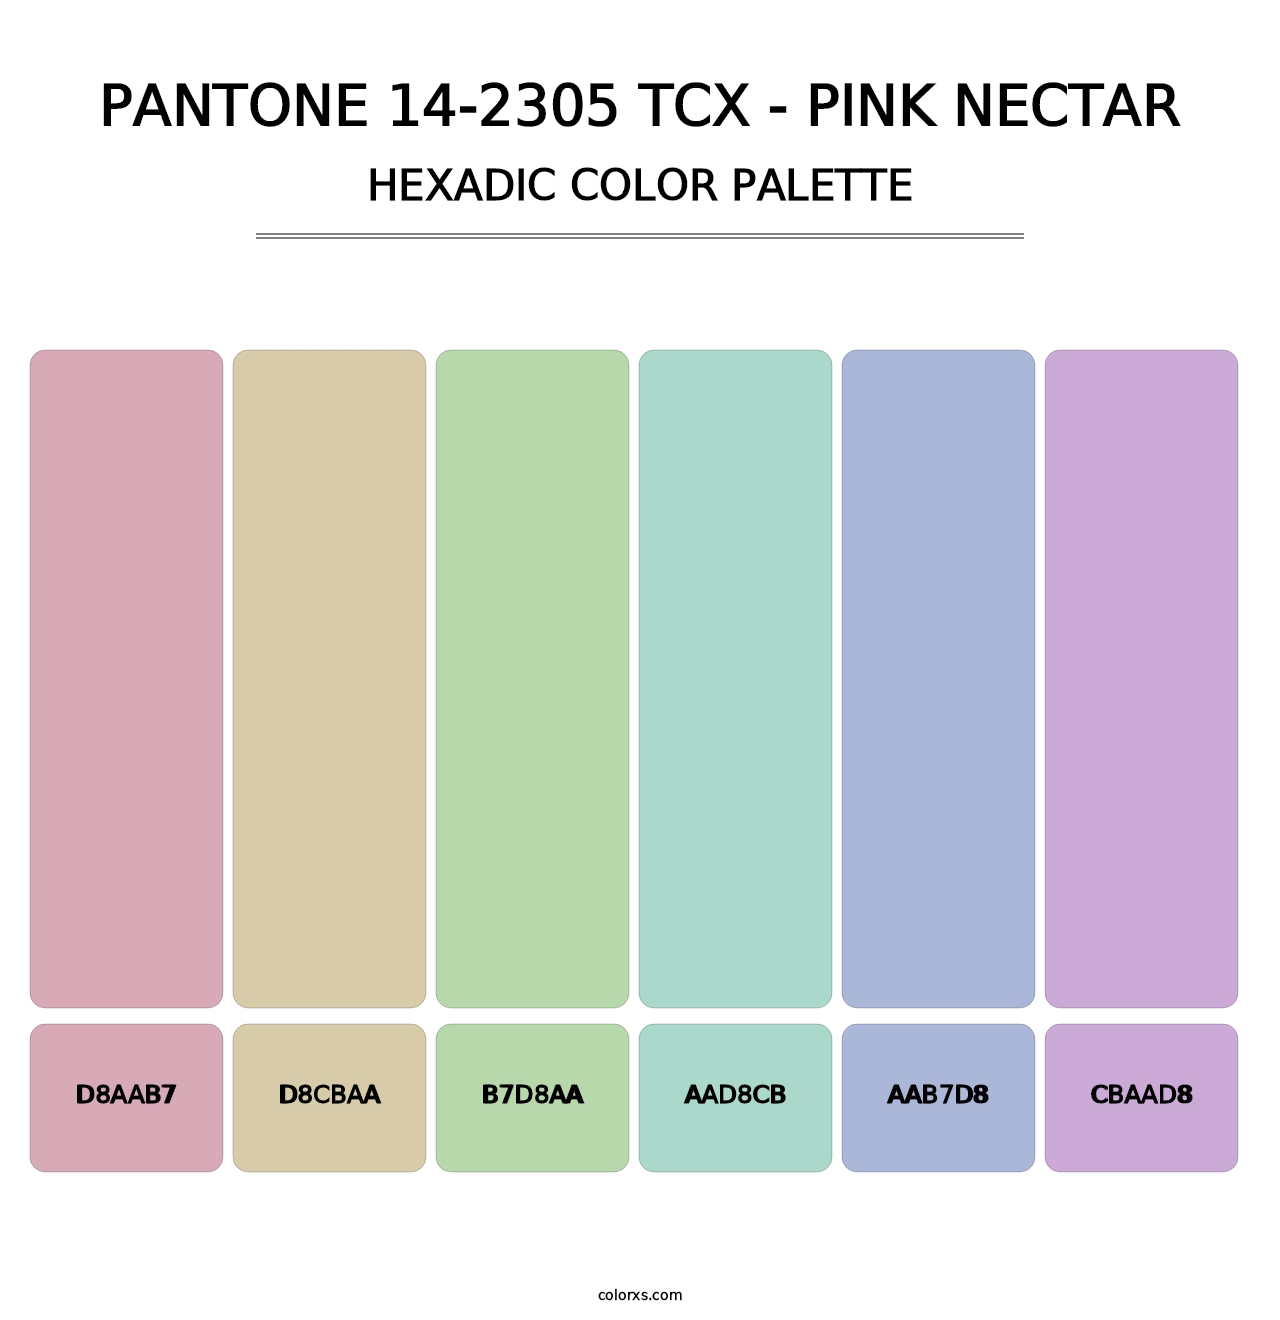 PANTONE 14-2305 TCX - Pink Nectar - Hexadic Color Palette